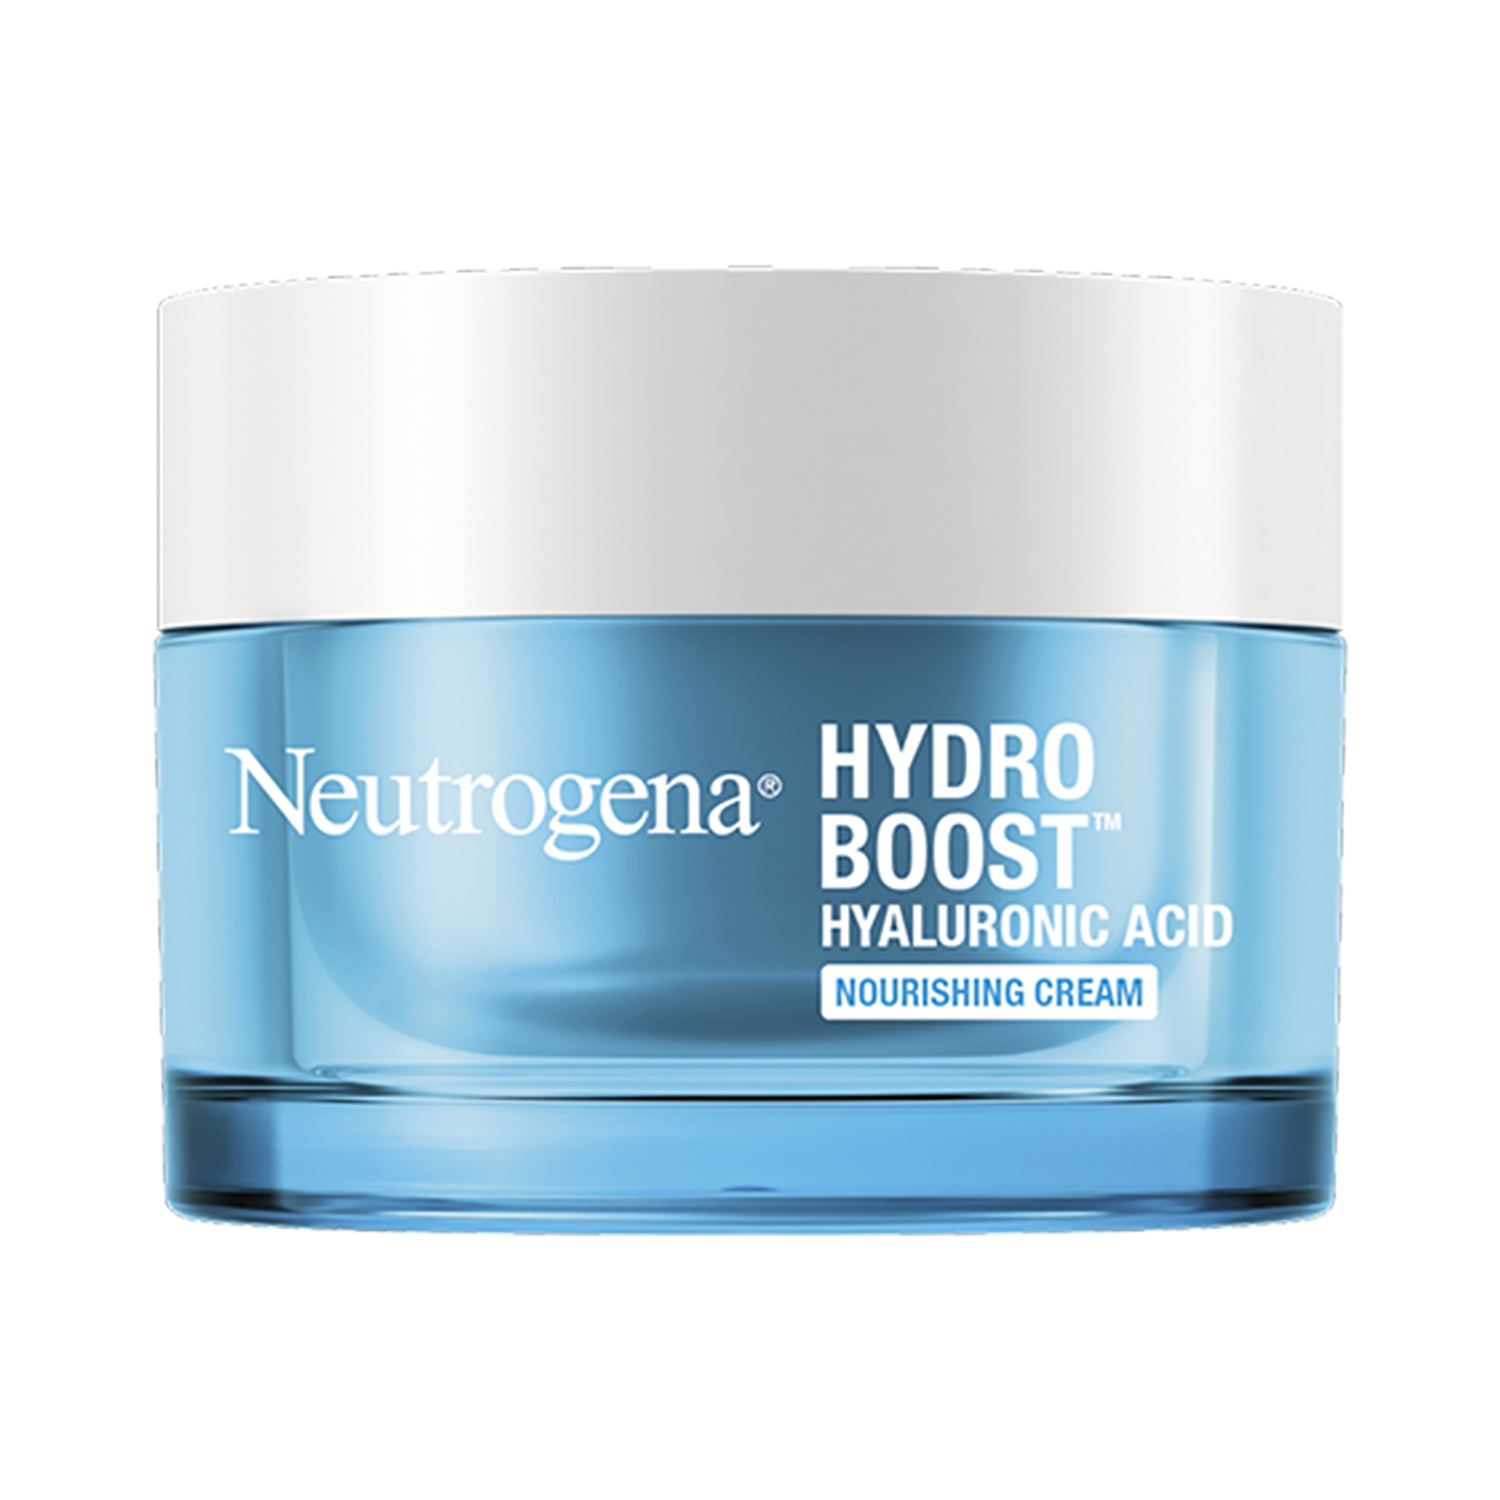 Neutrogena | Neutrogena Hydro Boost Hyaluronic Acid Nourishing Cream With Ceramides For Dry Skin (50g)